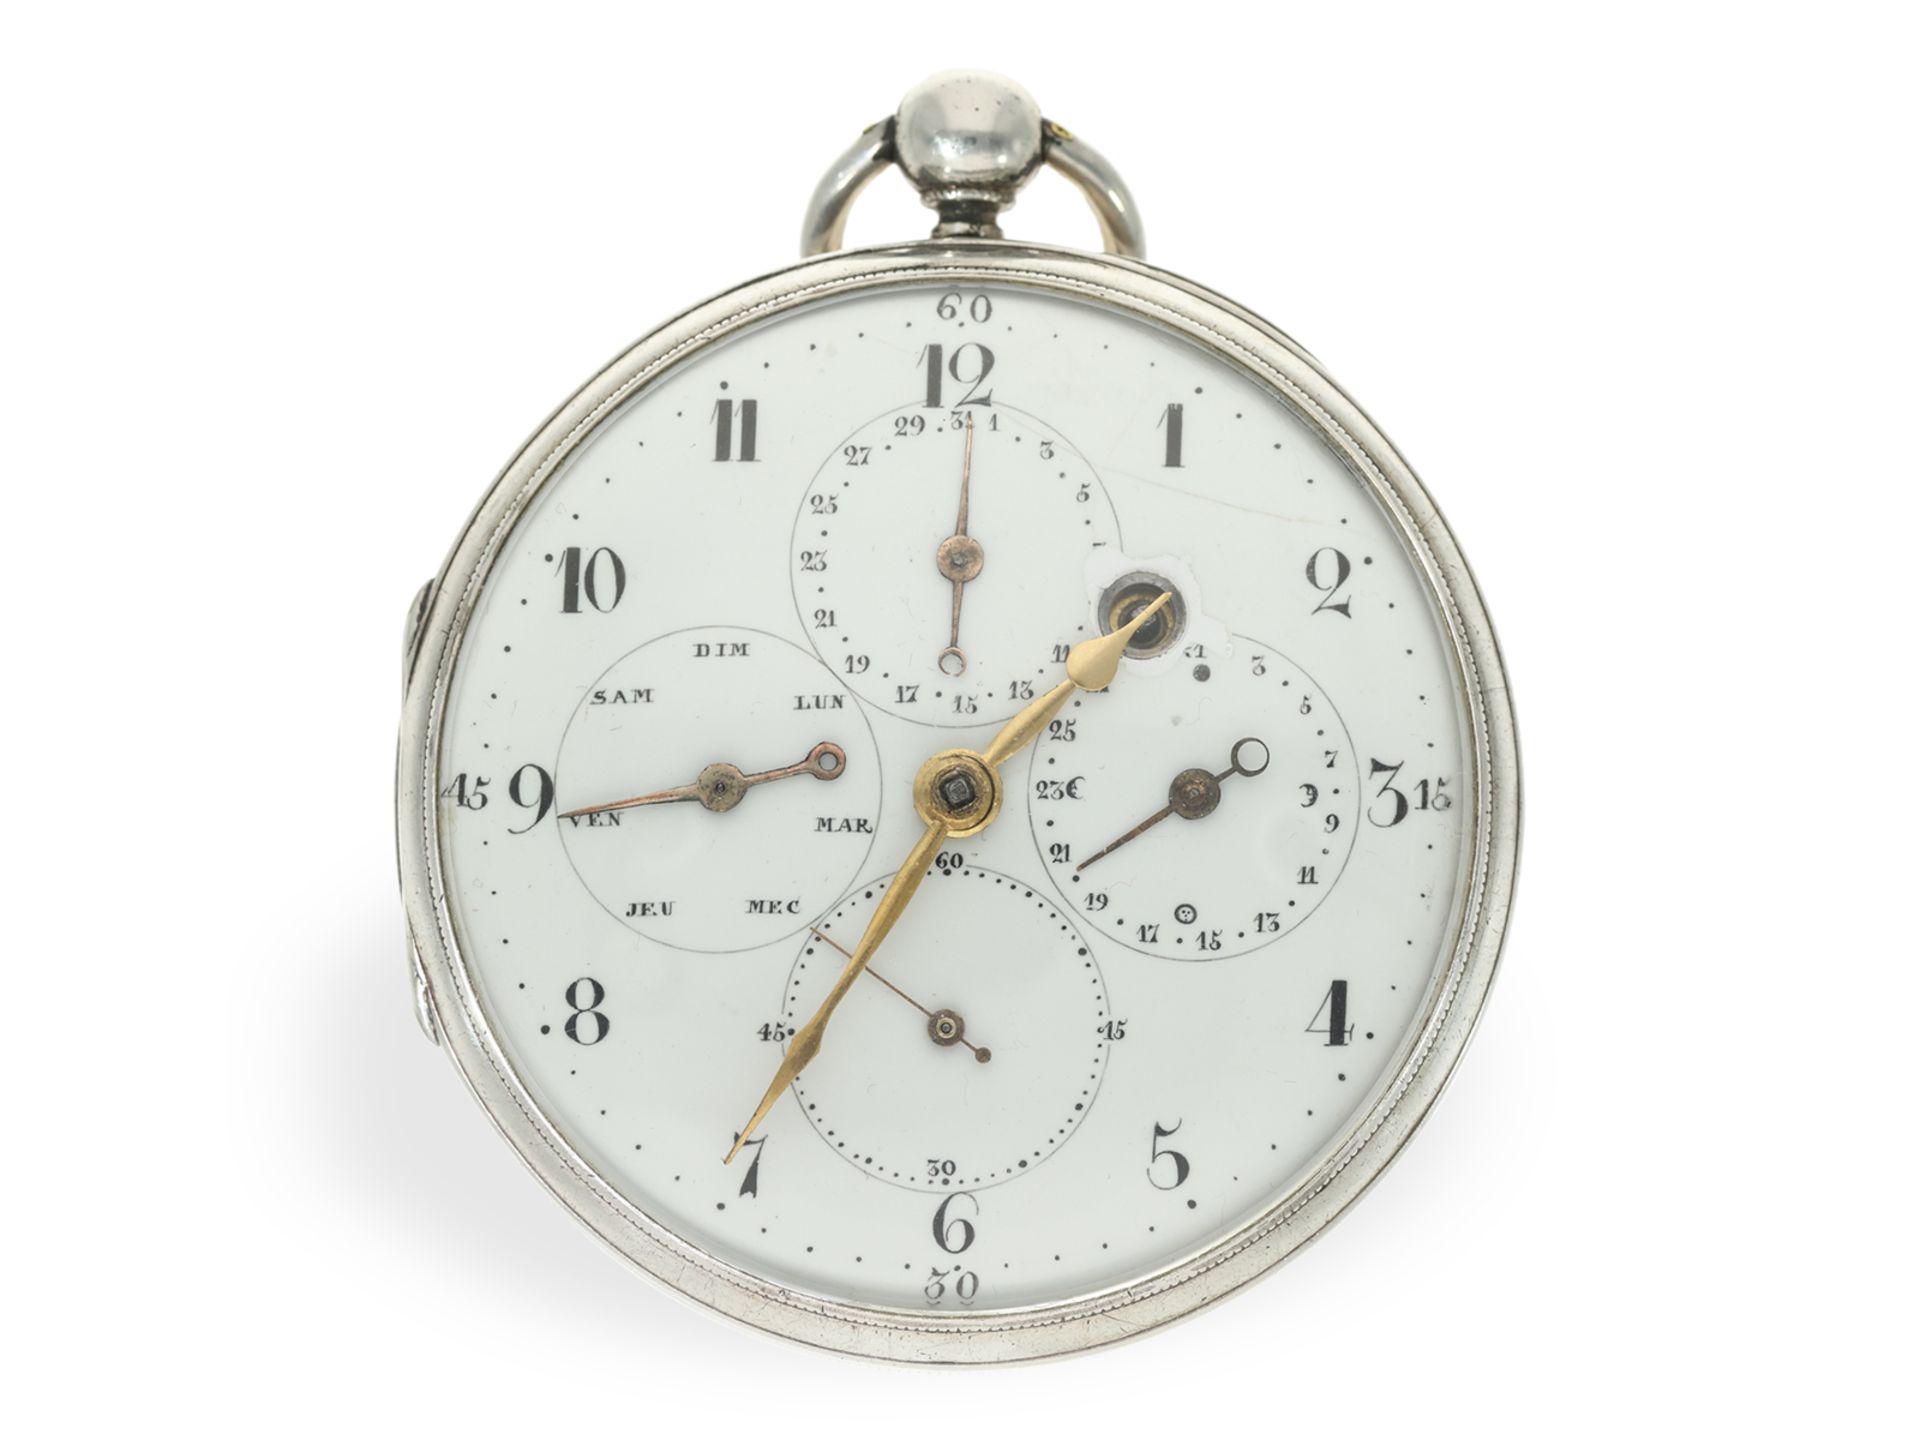 Pocket watch: large astronomical verge watch with seconds display, Switzerland around 1800